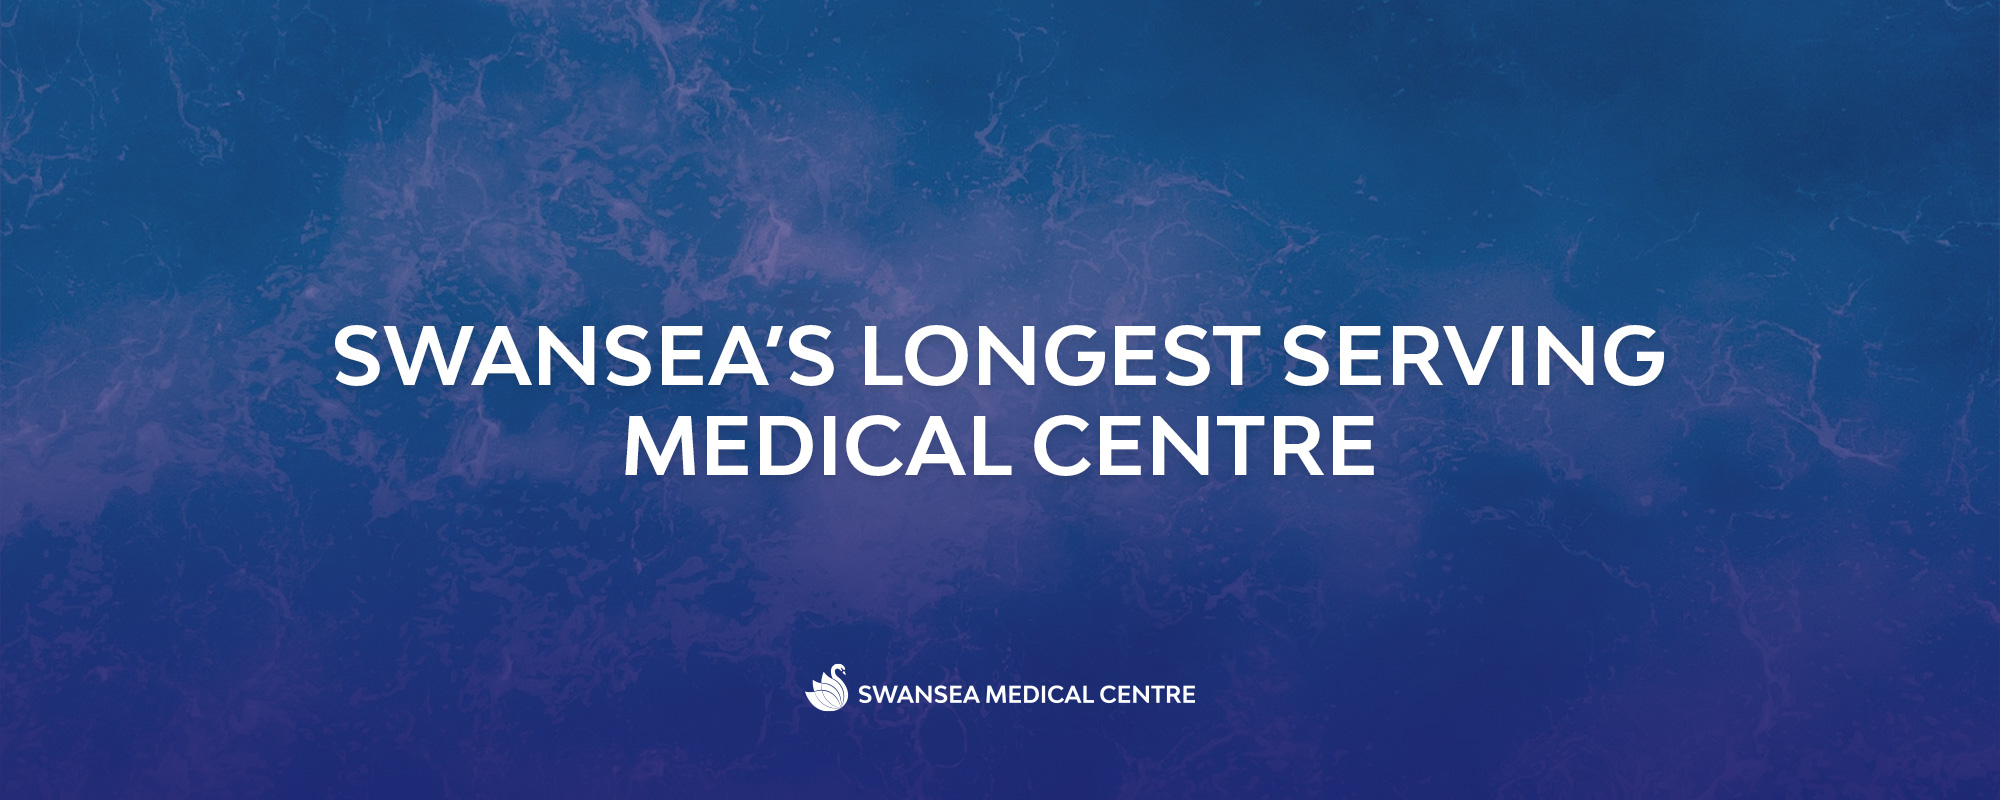 Swansea Medical Centre